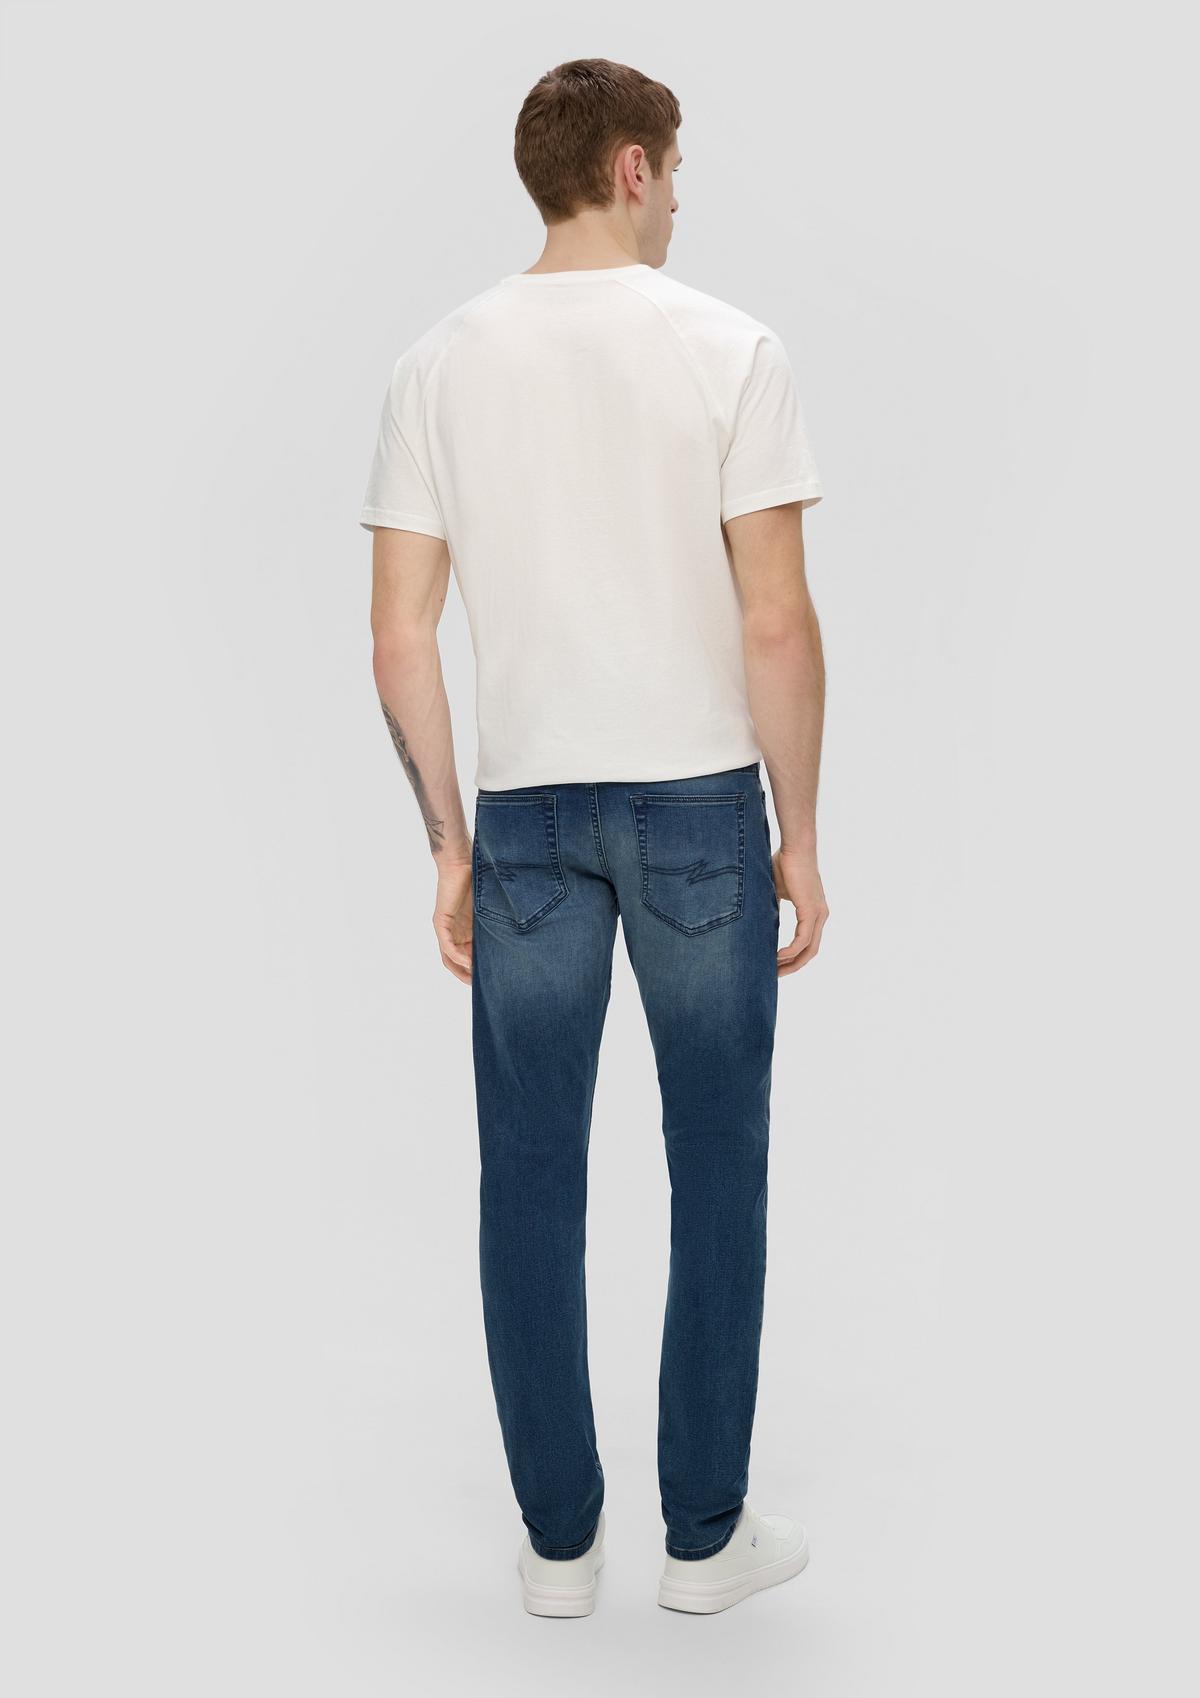 s.Oliver Rick jeans / slim fit / mid rise / slim leg